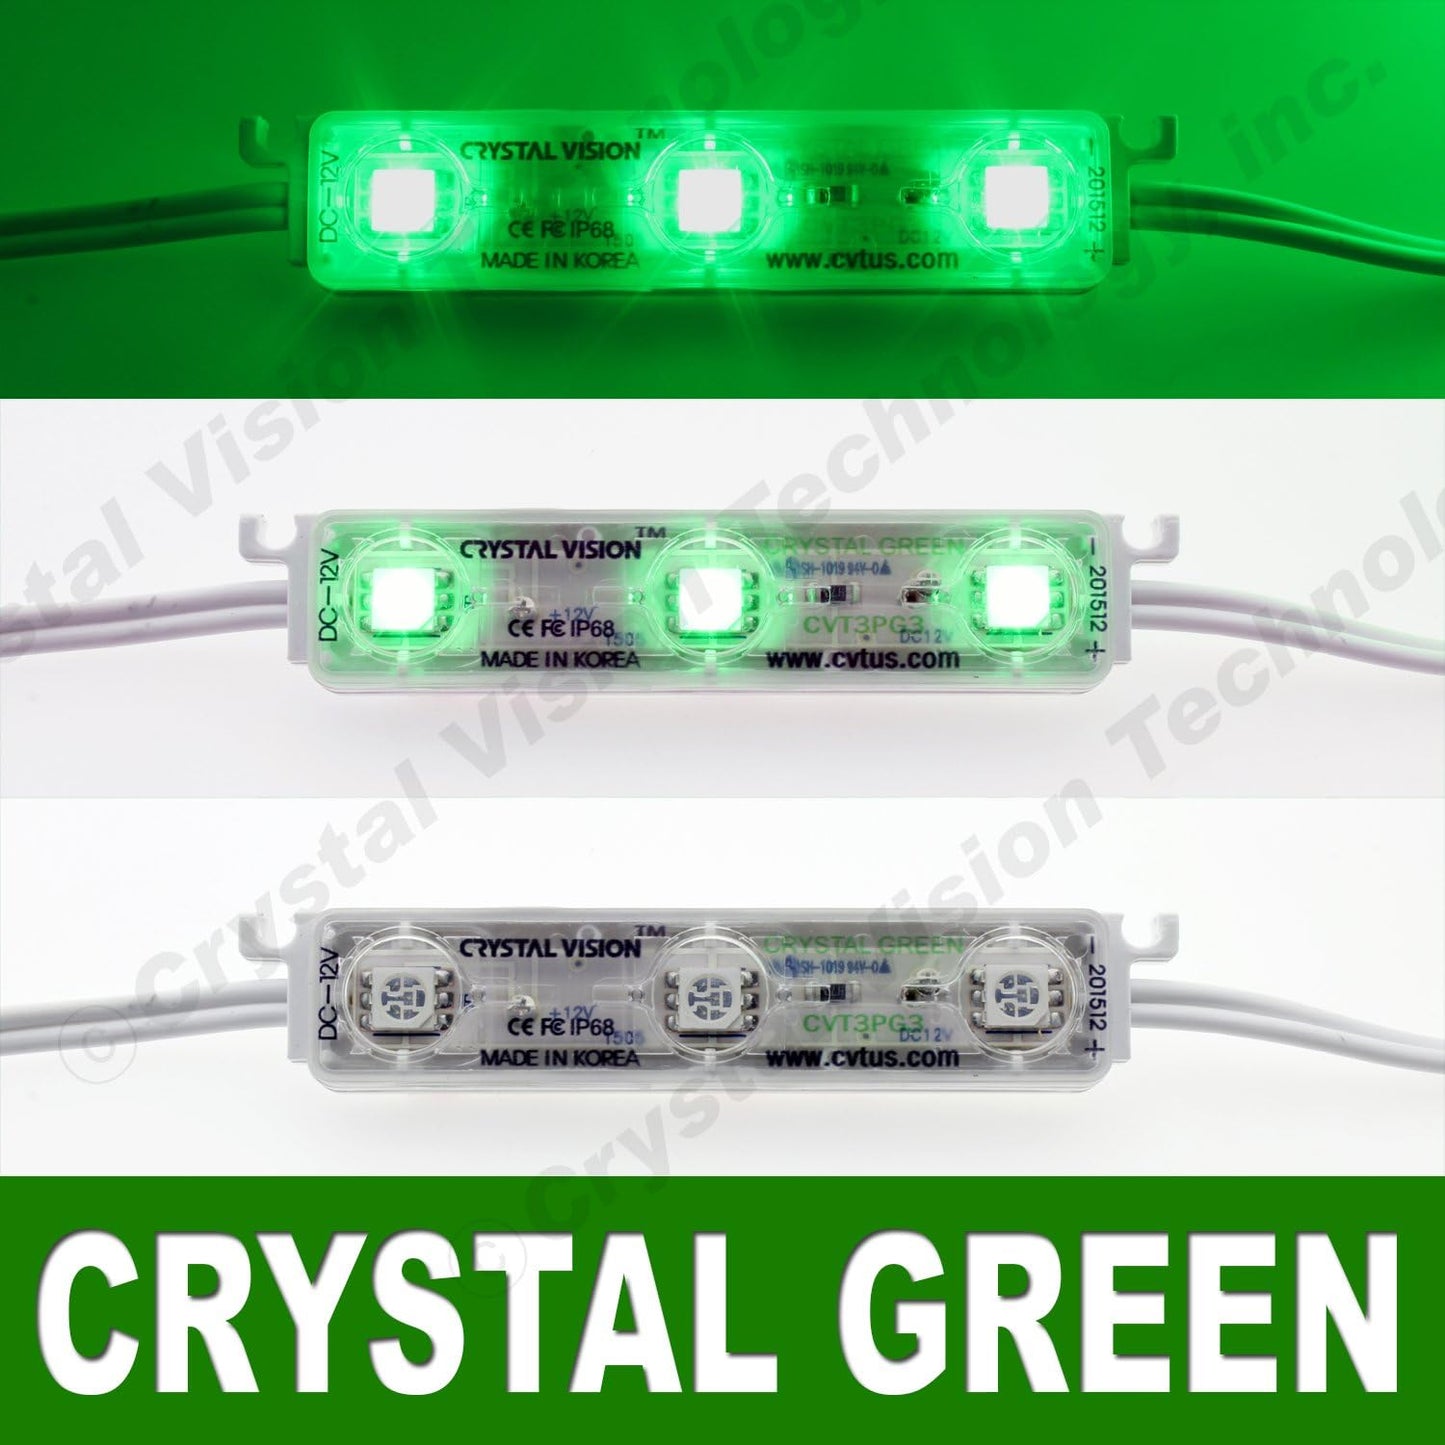 Crystal Vision CVT3SW3K-KIT50 LED Storefront Window Kit/Plug & Play Samsung LED Bulb Made in Korea 50 ft, Green